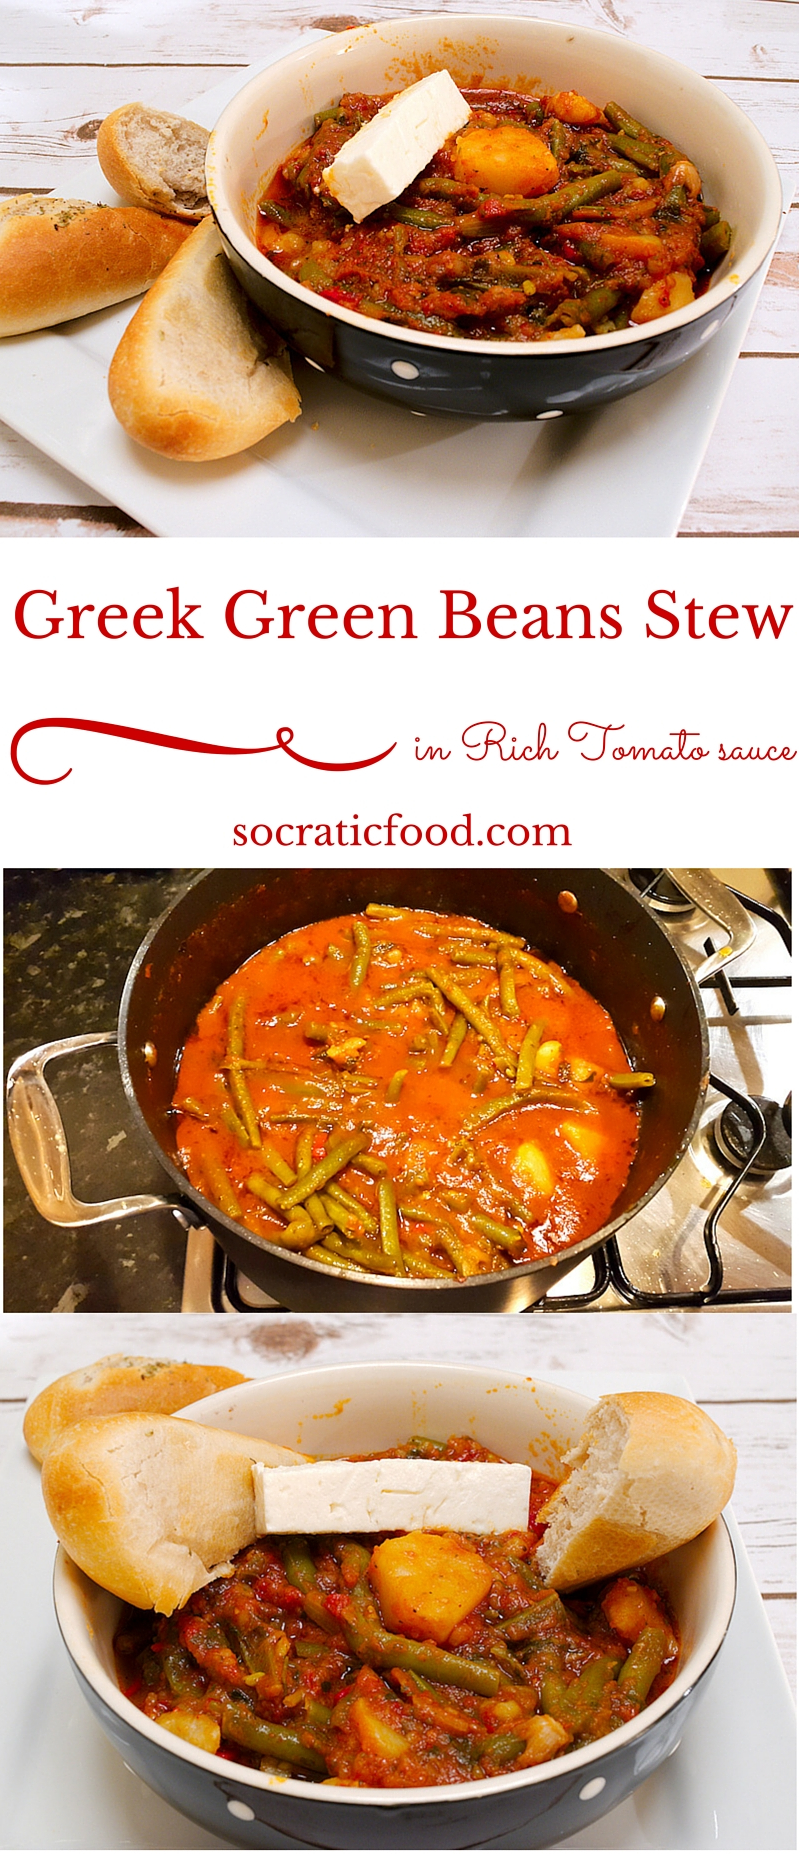 Vegetarian Green Bean Stew in a Rich Tomato Sauce